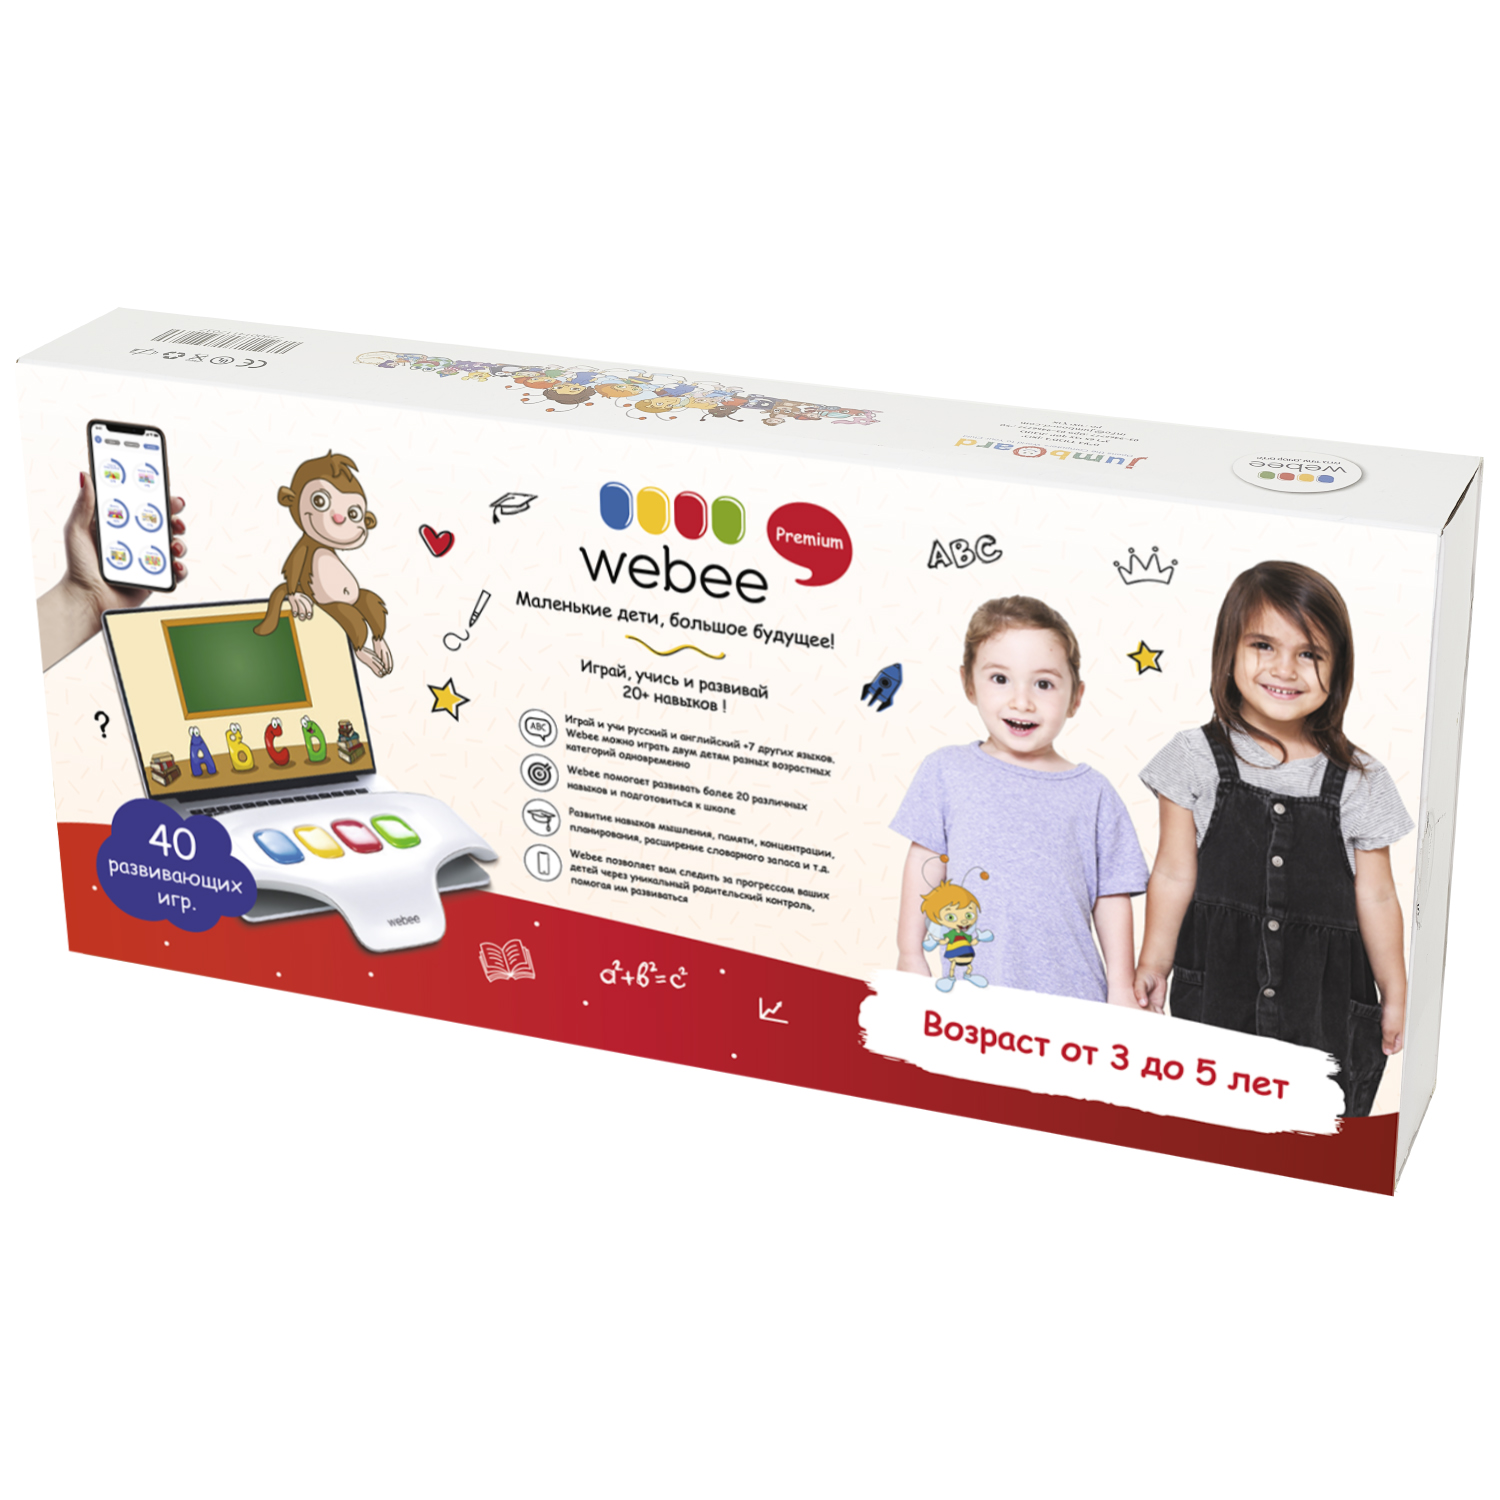 Игрушка Webee детский развивающий компьютер 30 игр W3 - фото 2